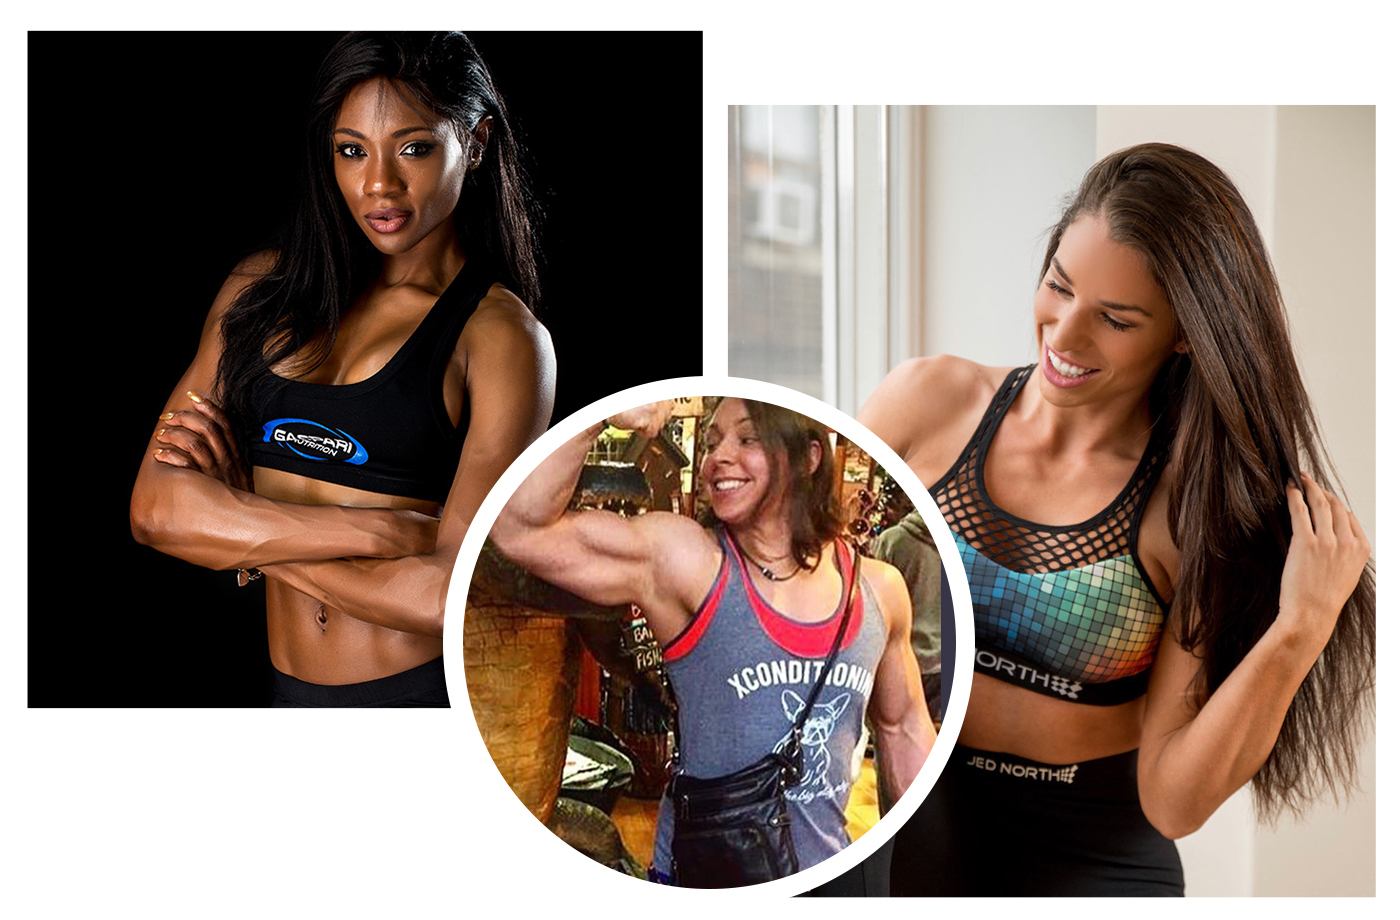 Female bodybuilders talk about femininity and self-worth